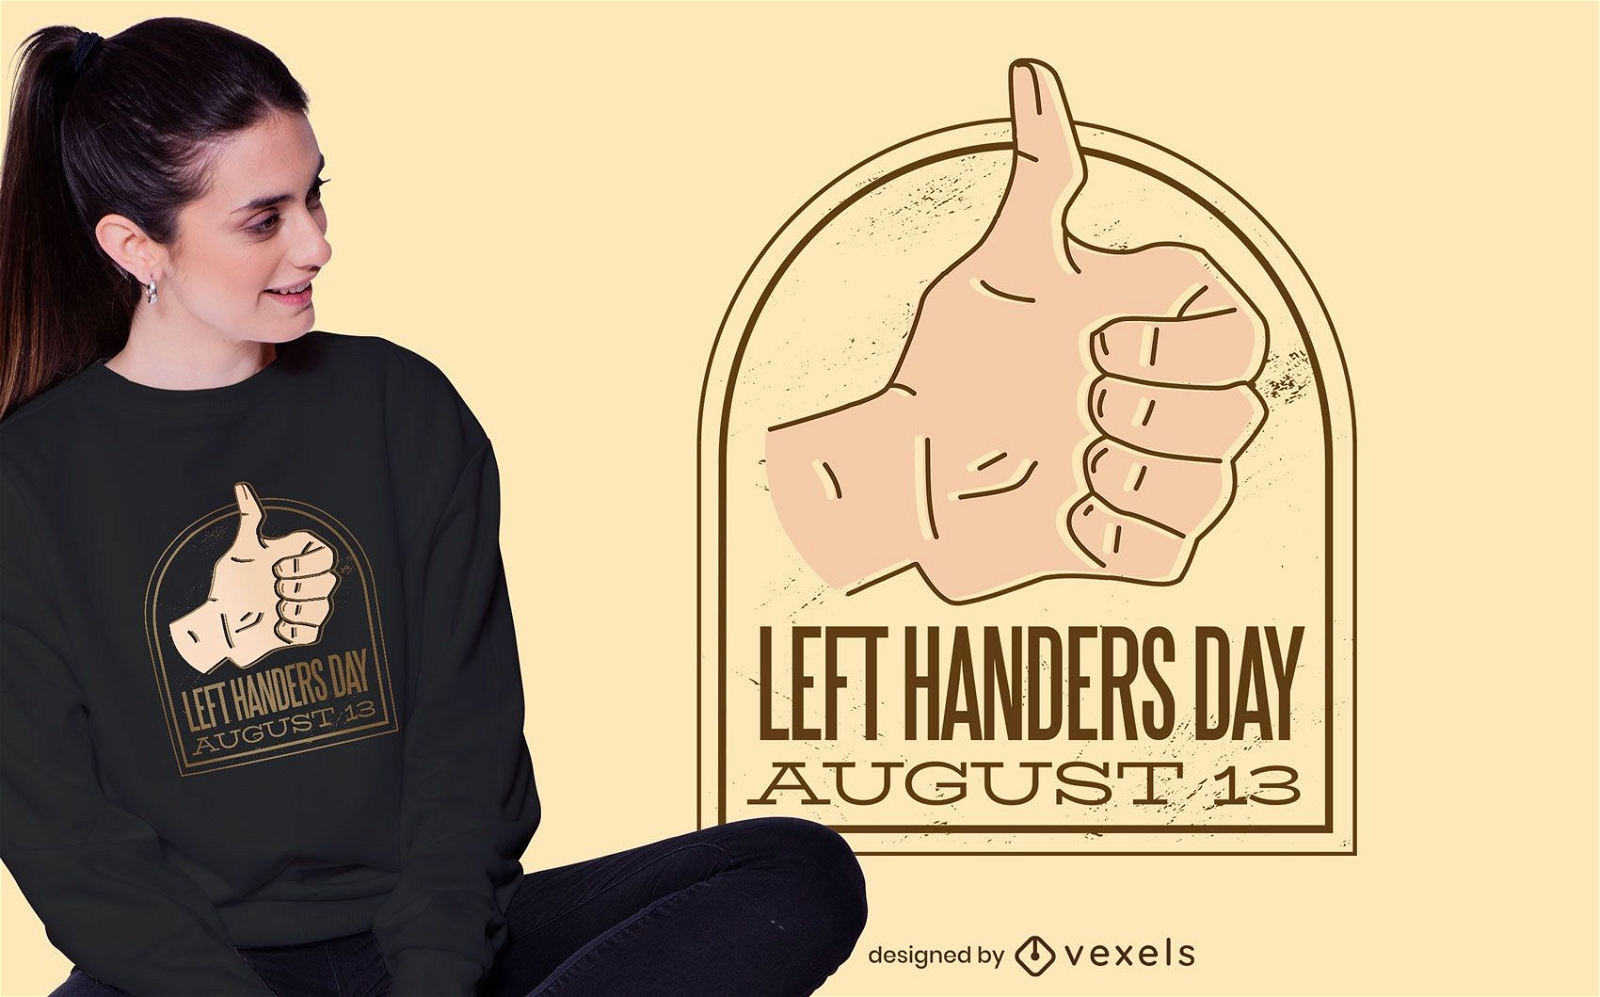 Left handers day t-shirt design